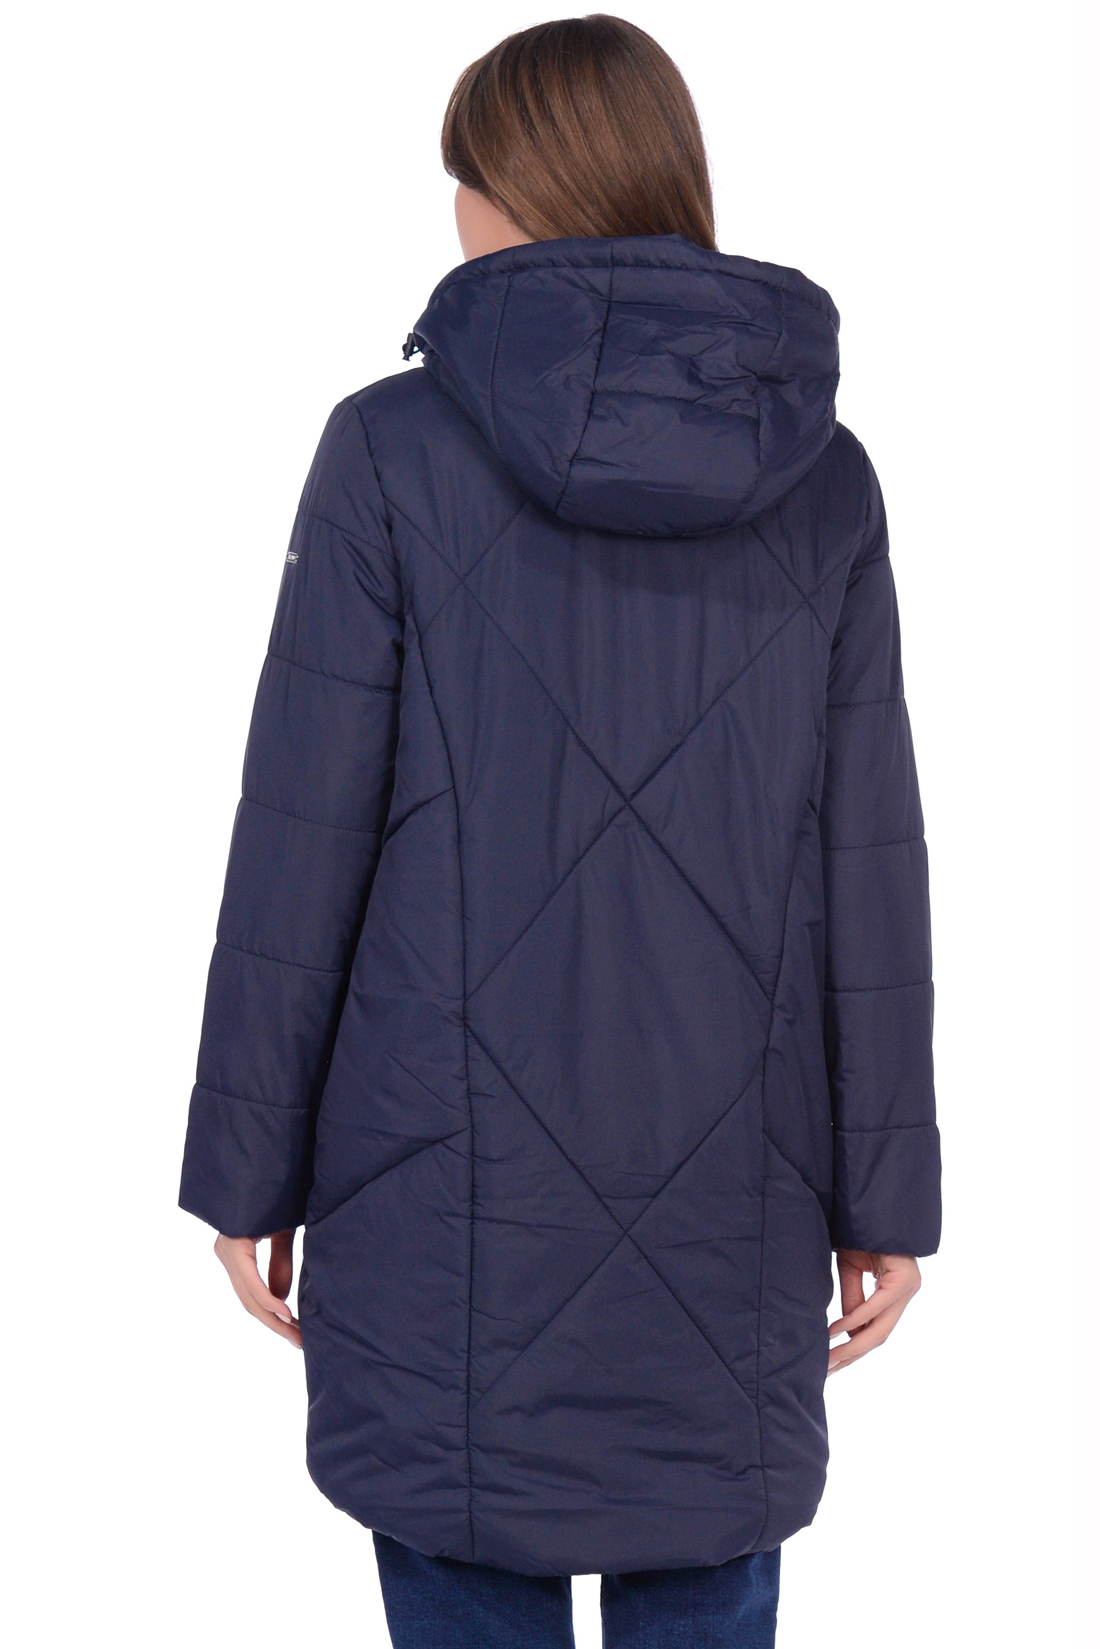 Куртка-парка с крупной простёжкой (арт. baon B039551), размер L, цвет синий Куртка-парка с крупной простёжкой (арт. baon B039551) - фото 2